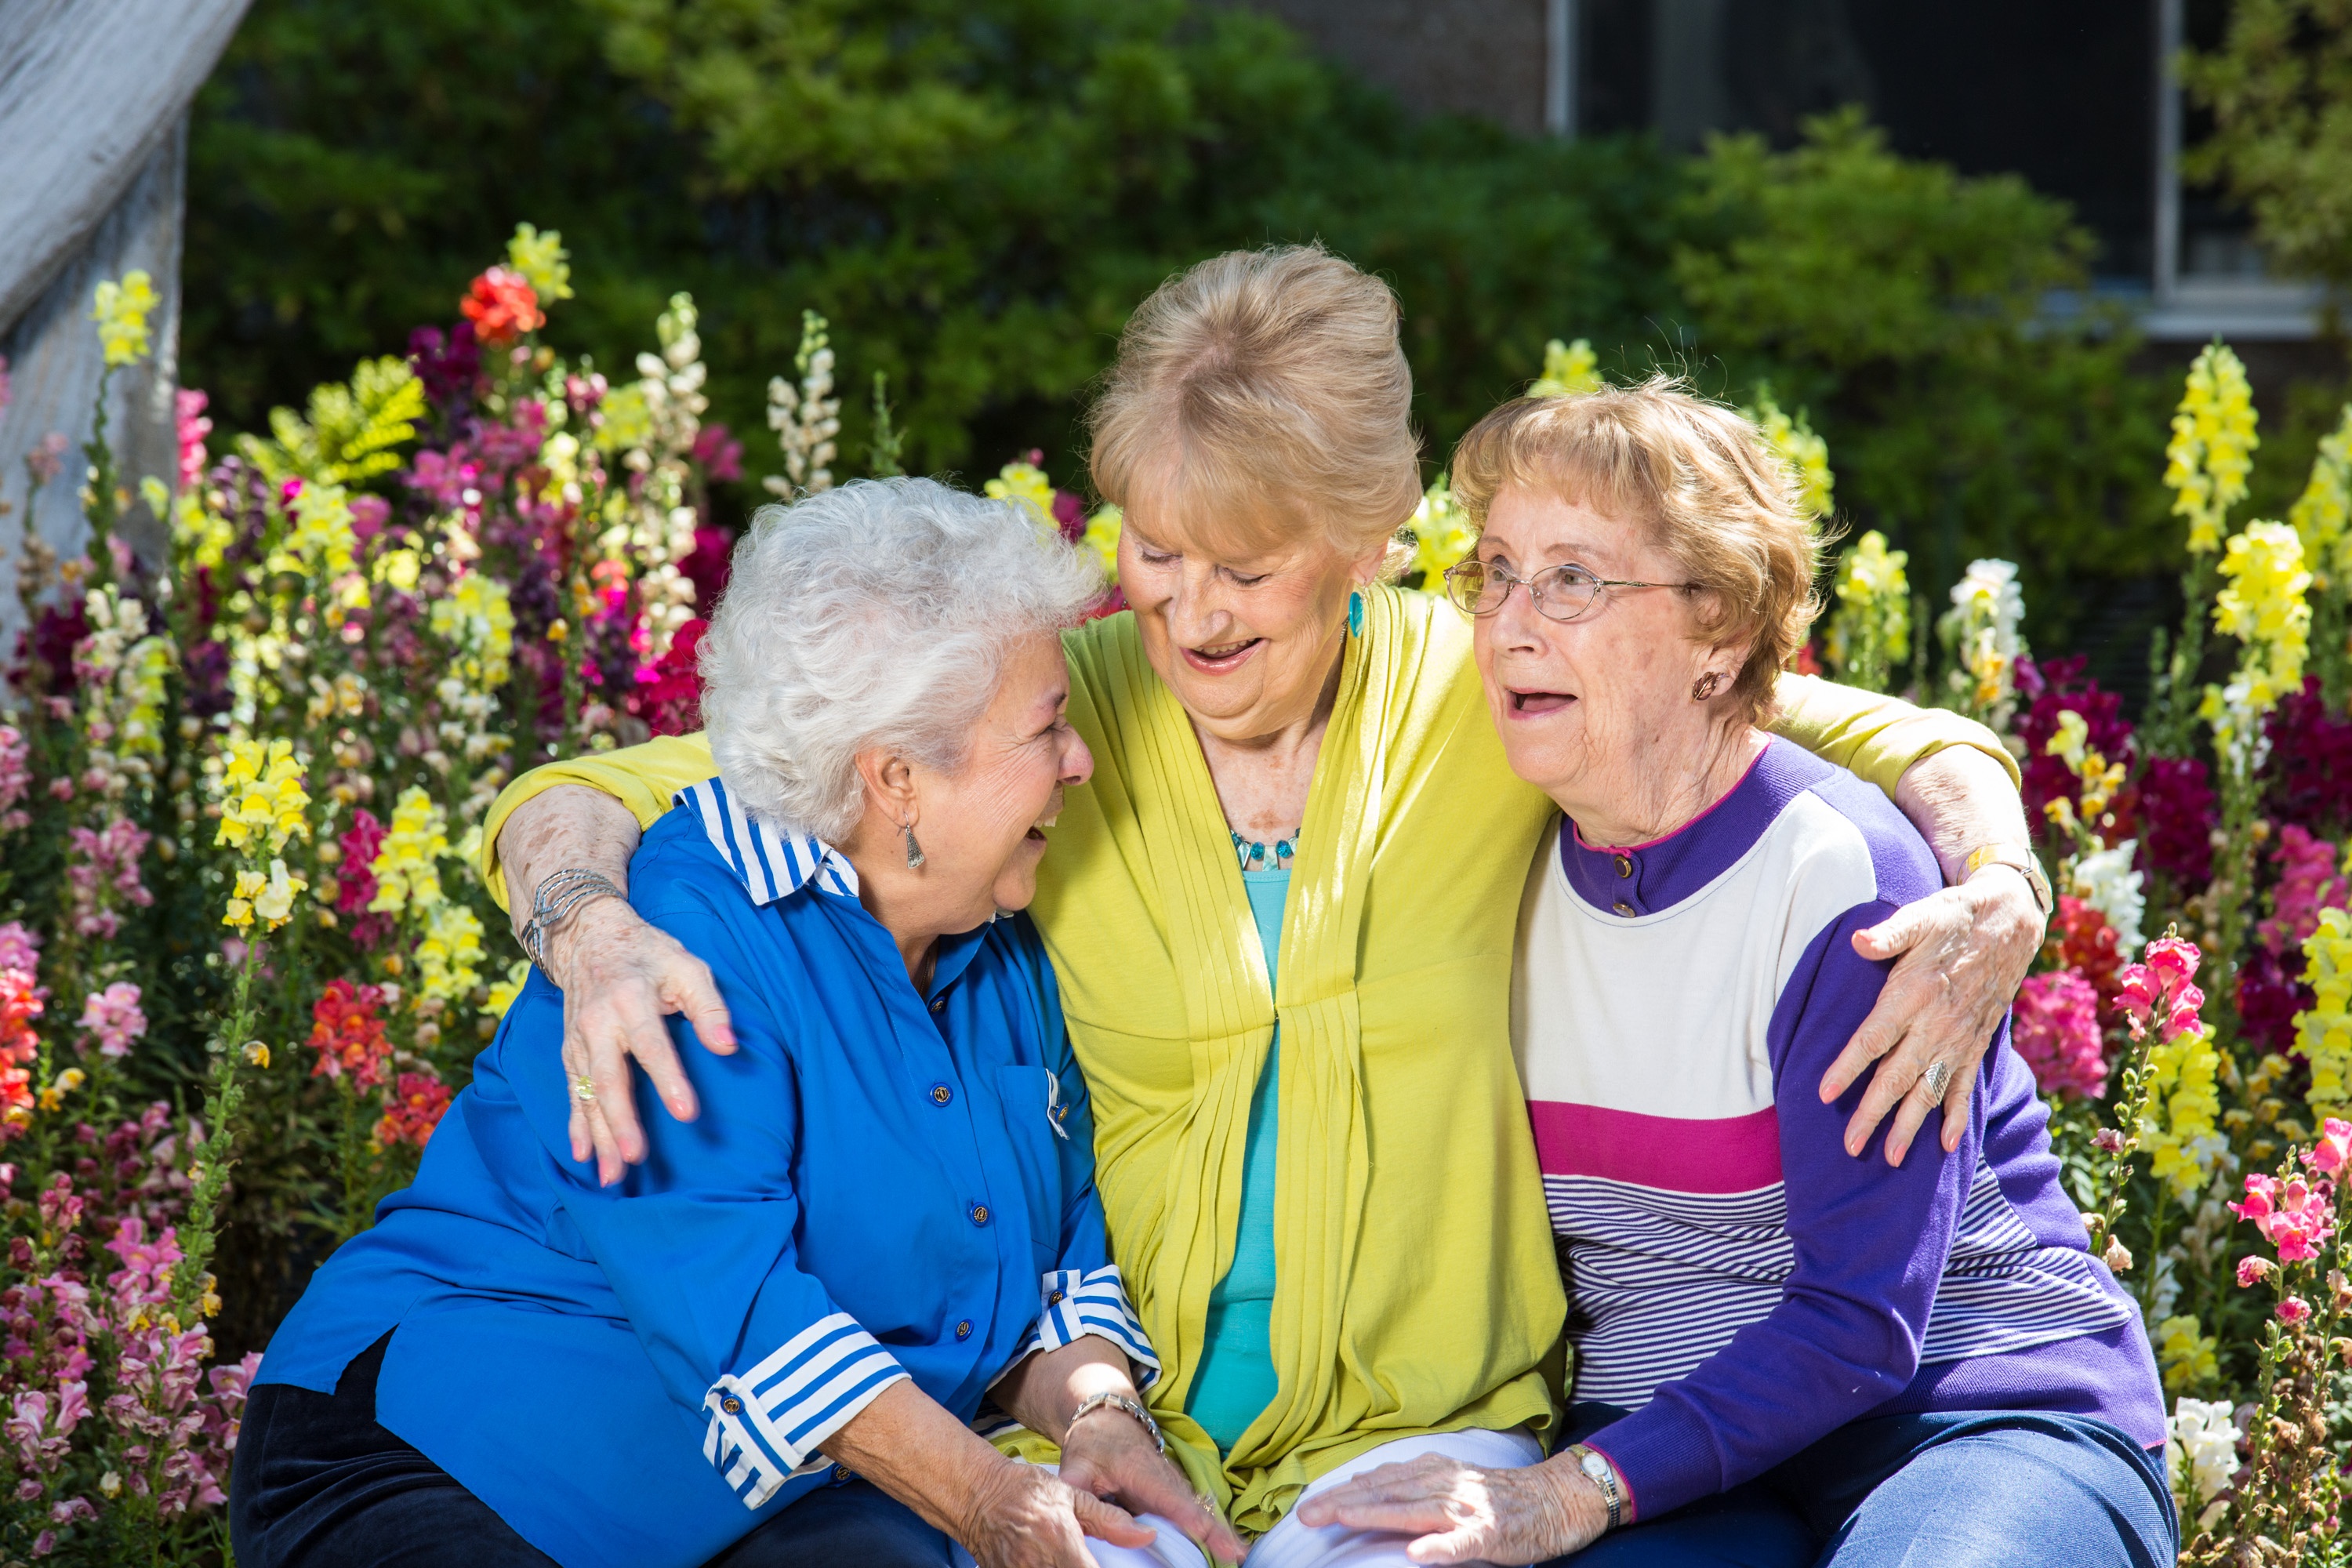 Grief Support in Senior Living Communities